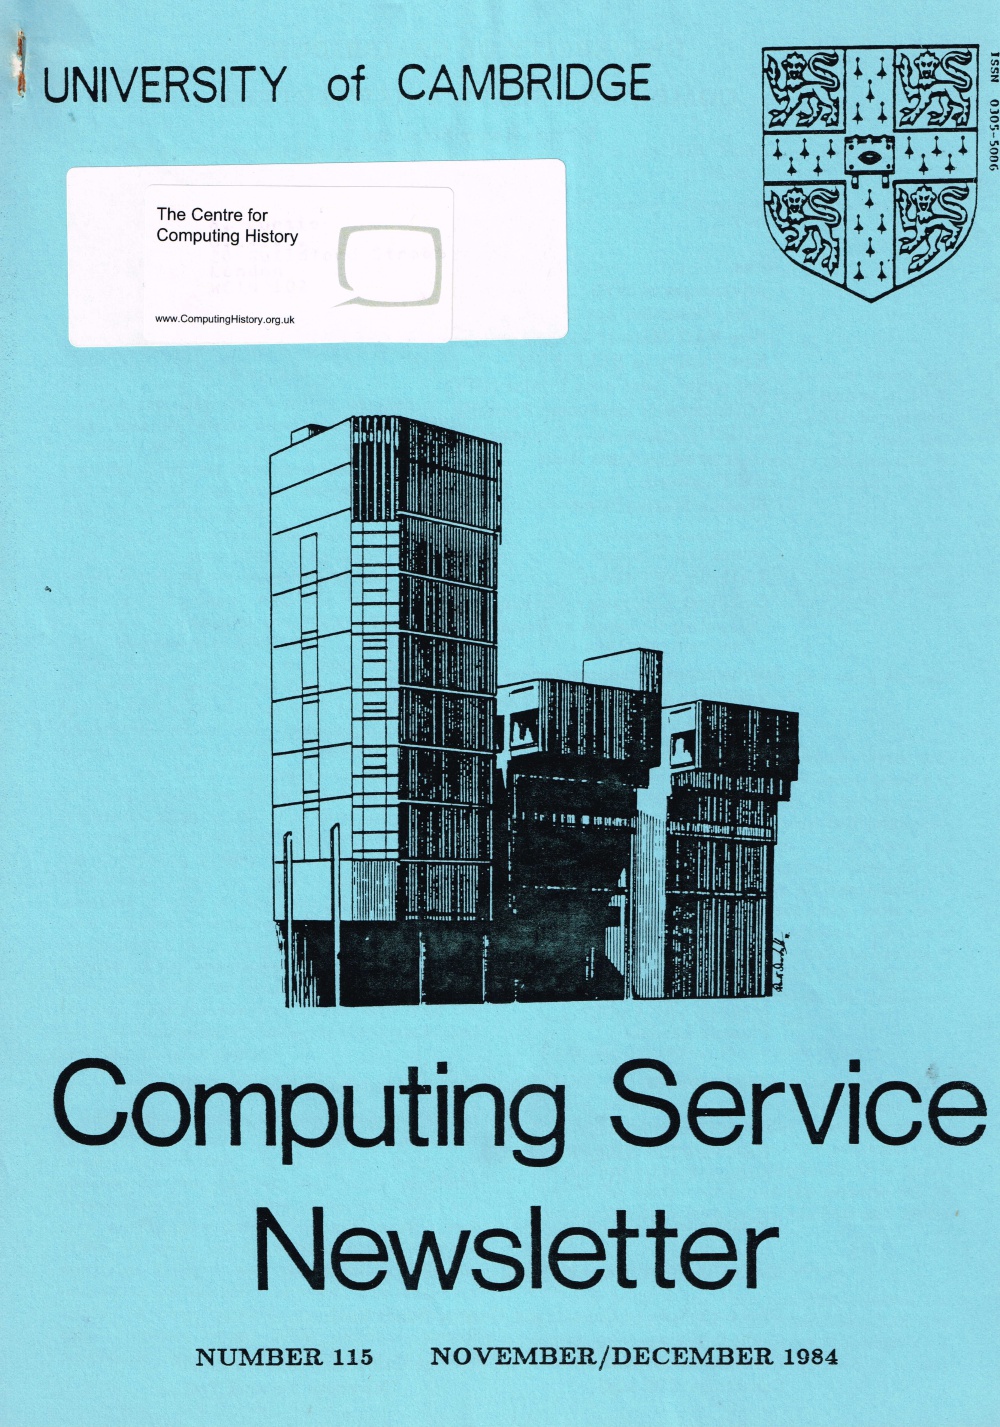 Article: University of Cambridge Computing Service November/December 1984 Newsletter 115